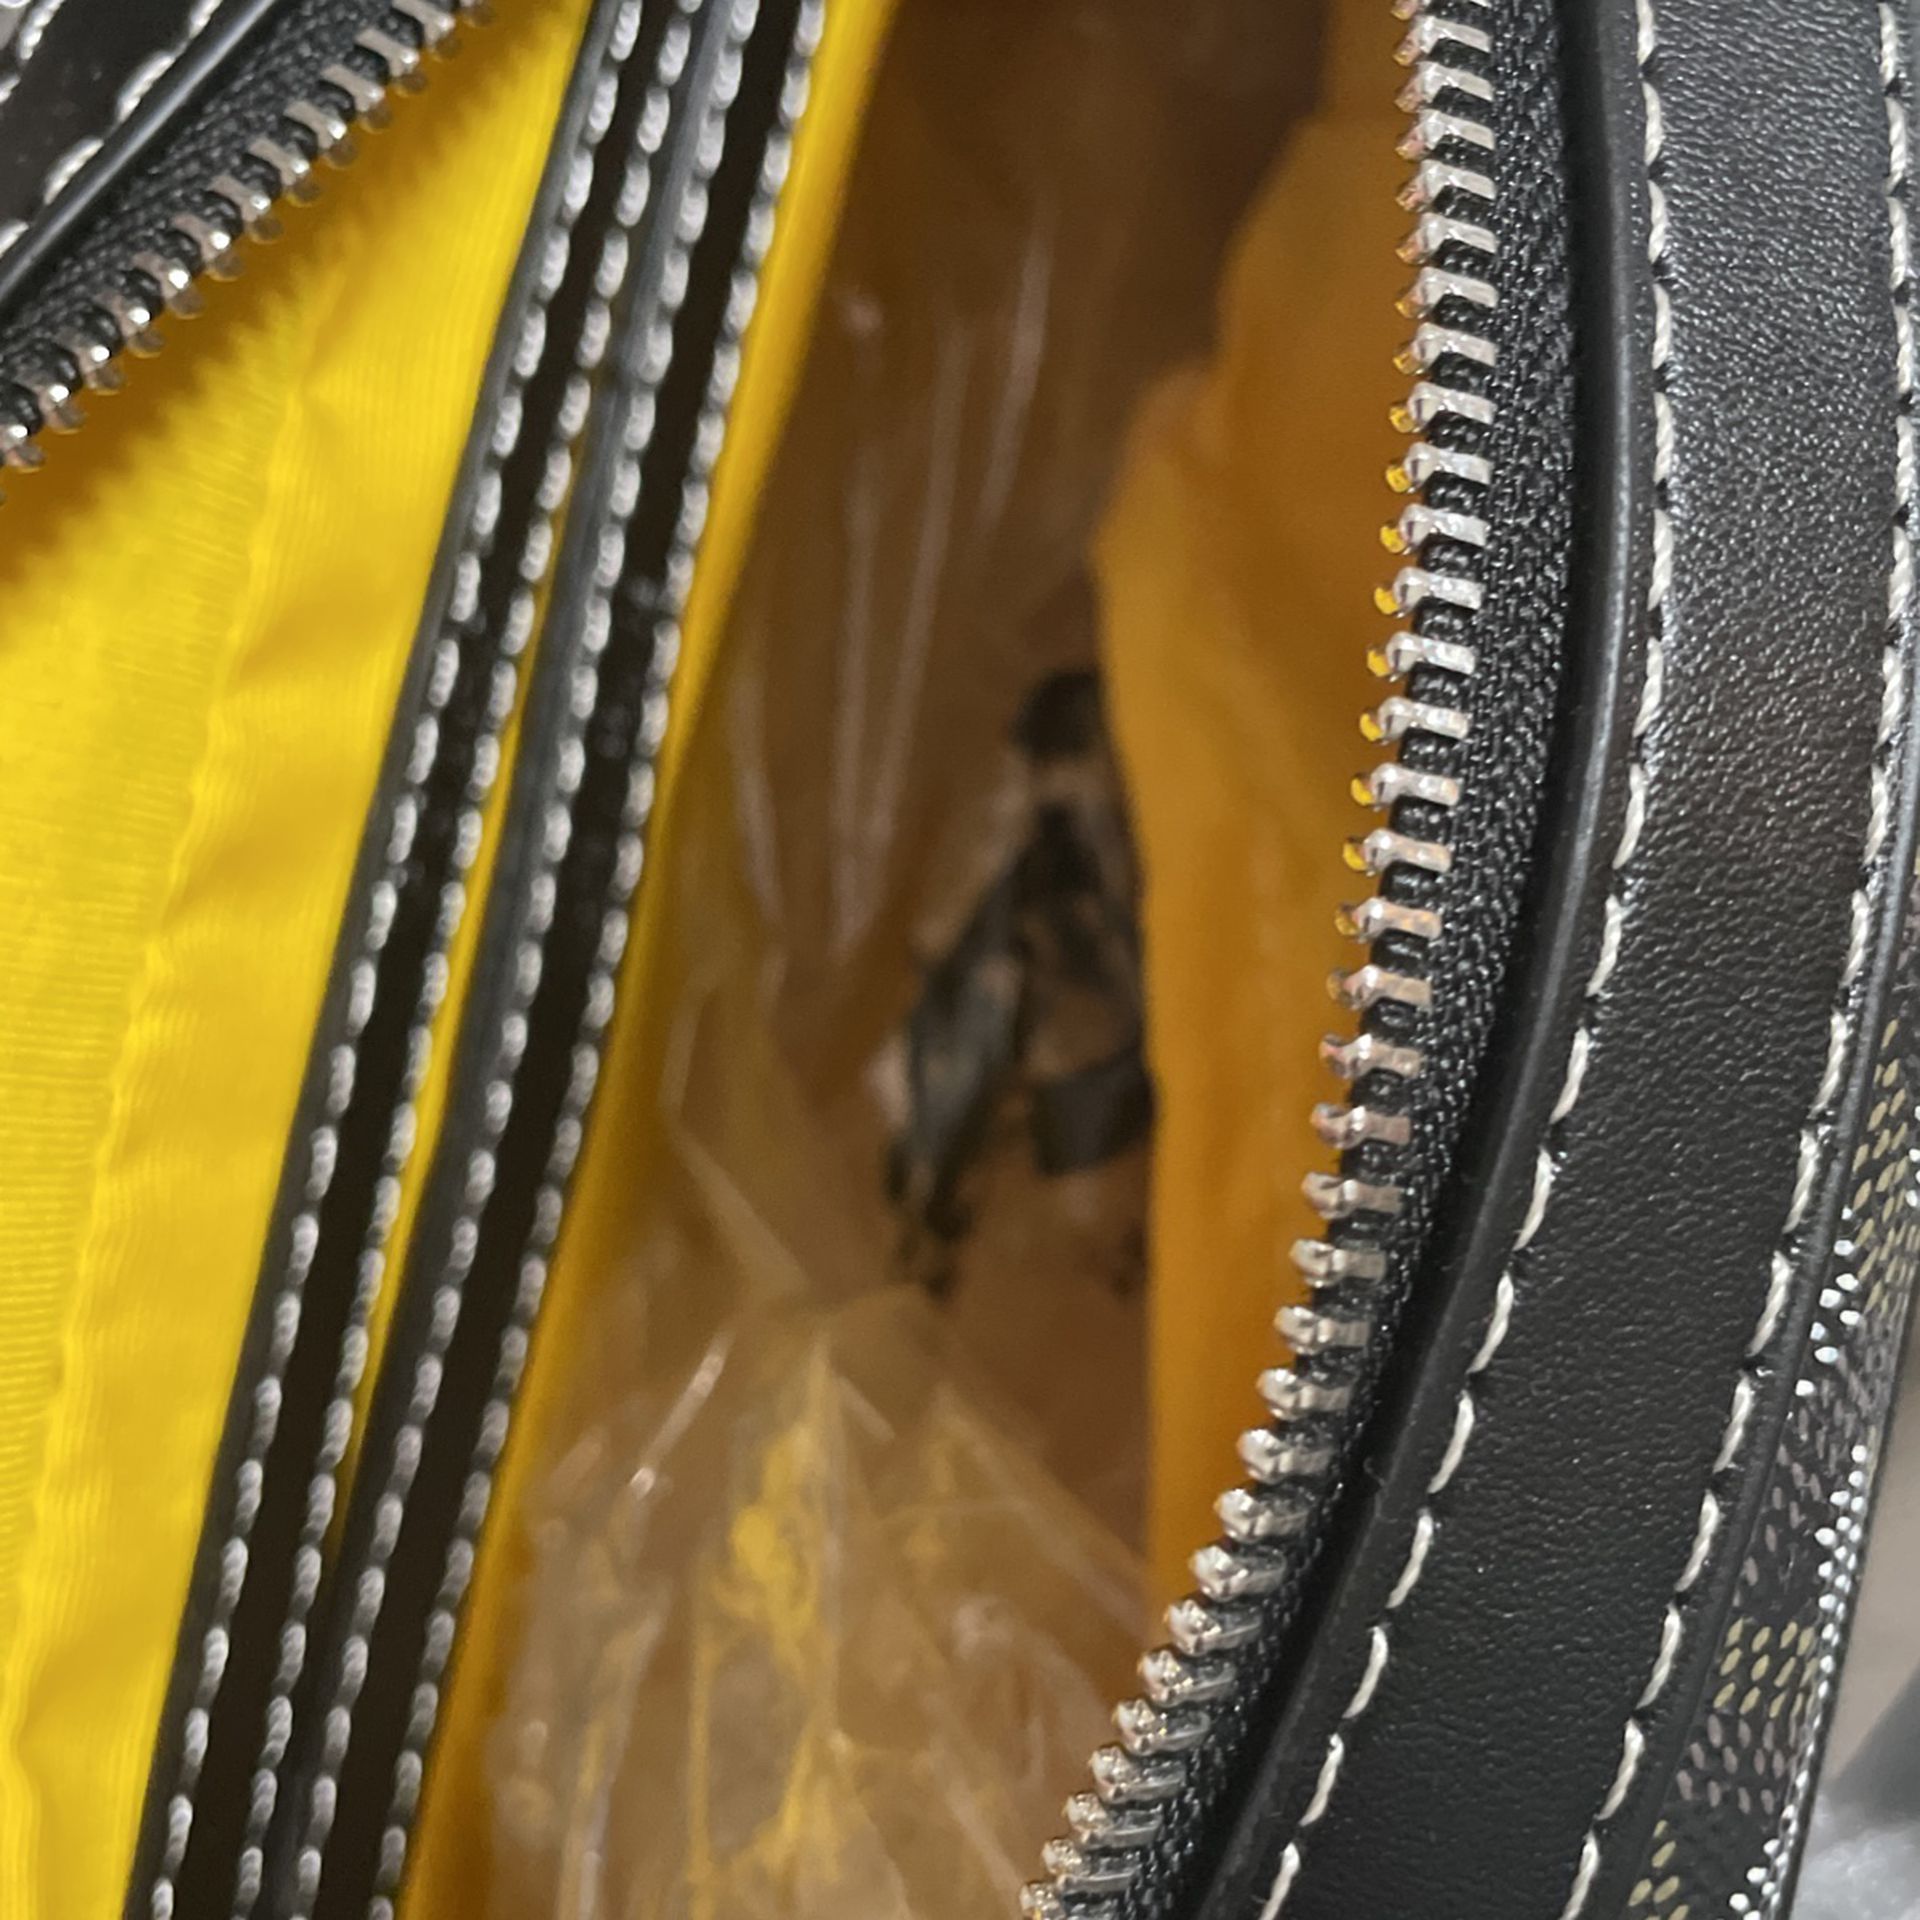 black goyard medium size tote bag for Sale in Rossmoor, CA - OfferUp